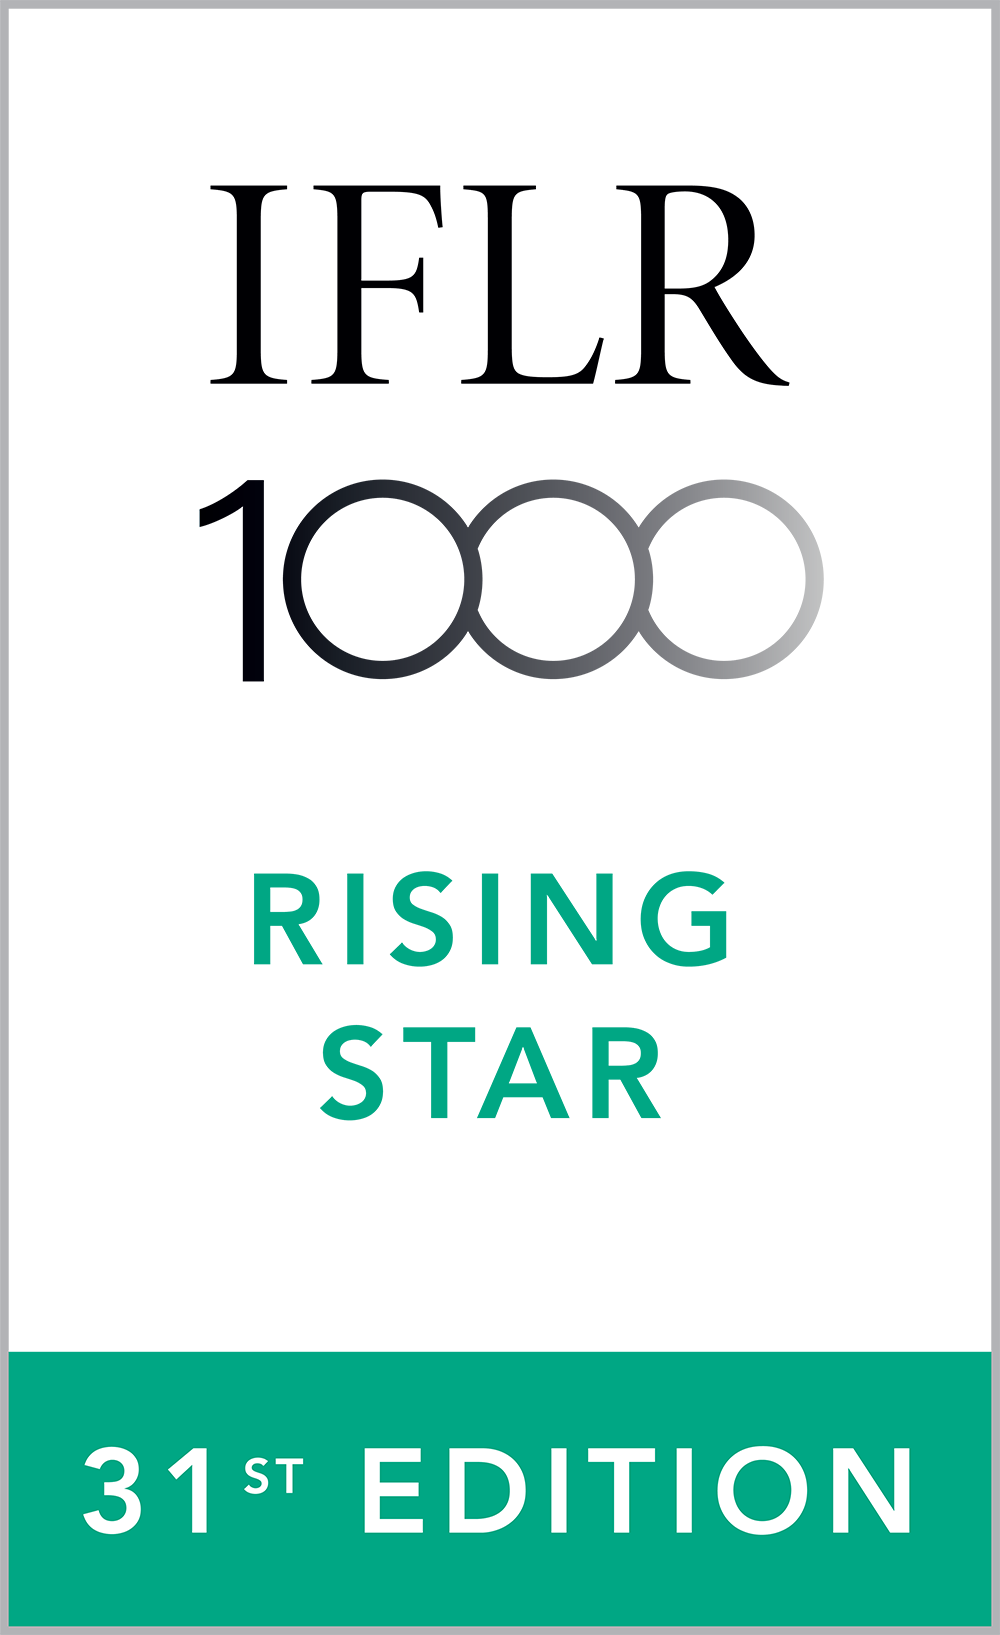 IFLR1000 Rising Star, 31st Edition (2021)